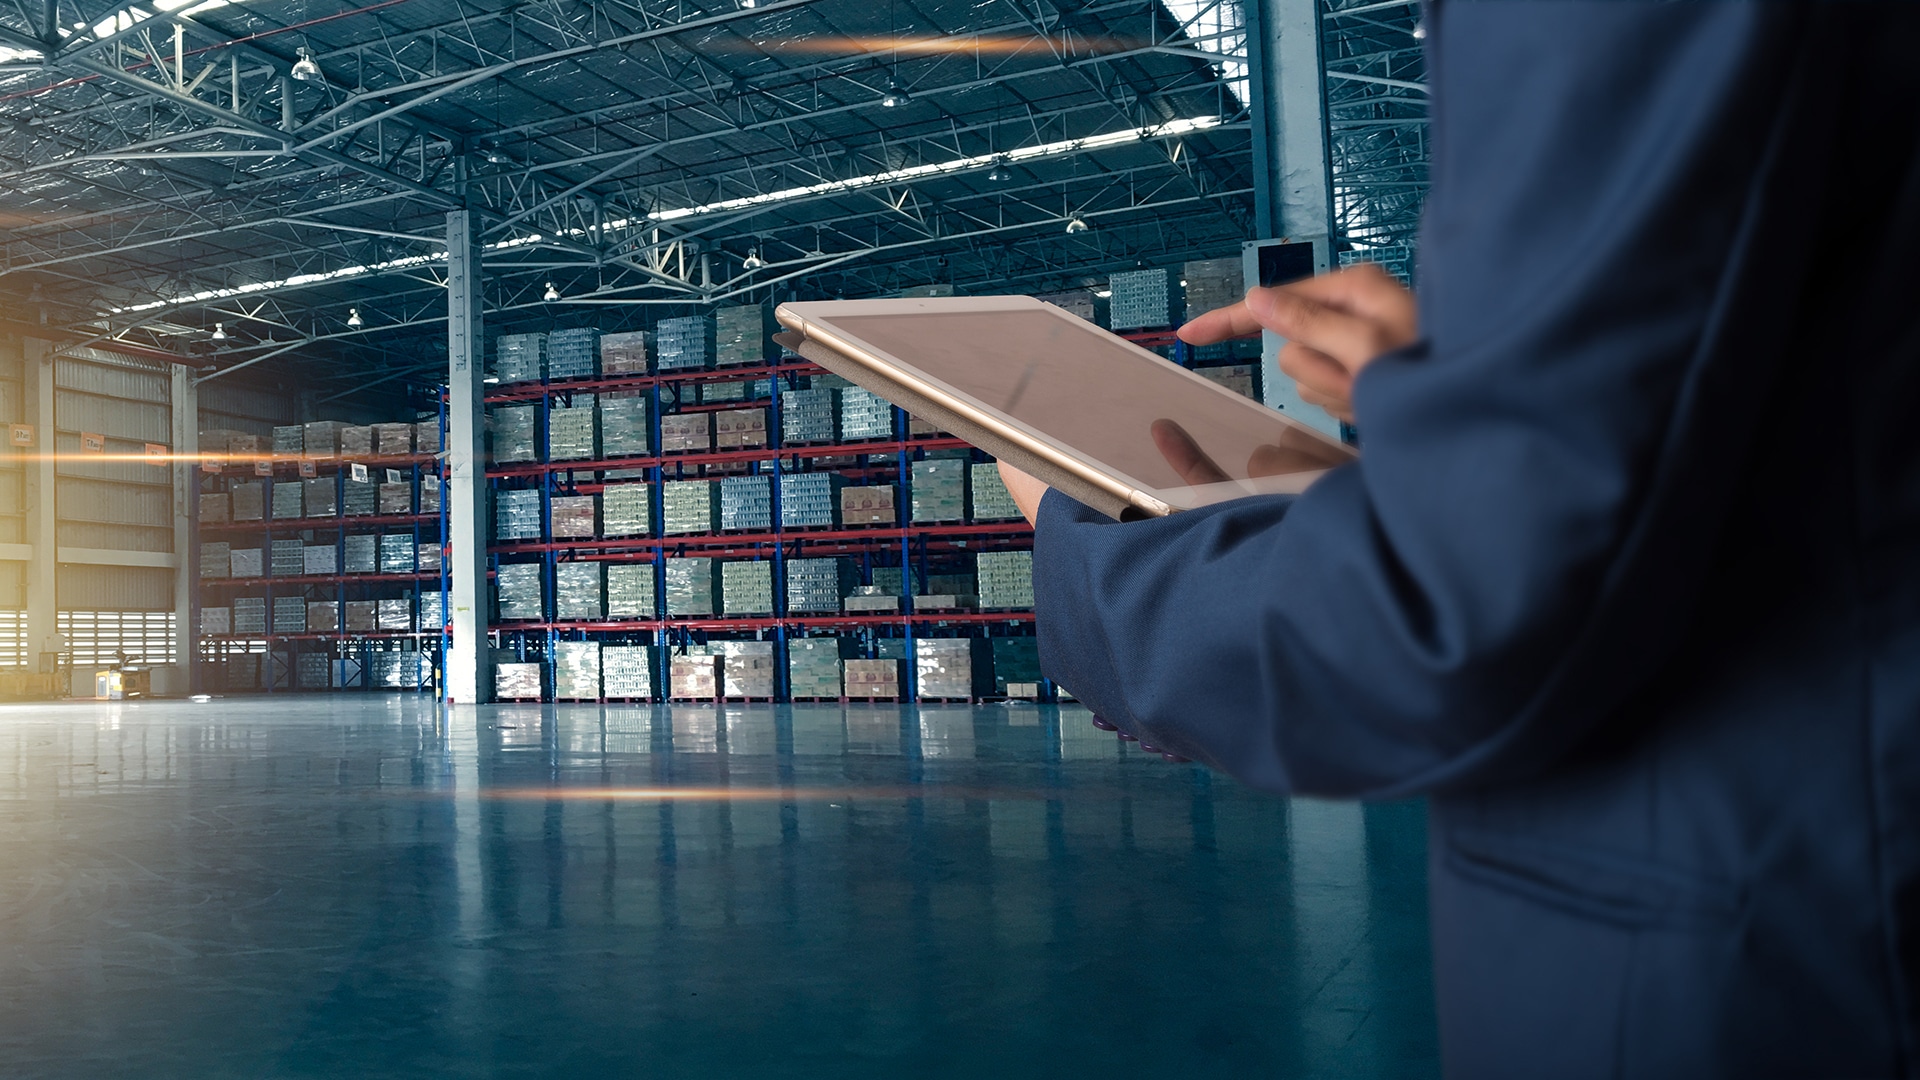 Warehouse Management • Professional expertise managing